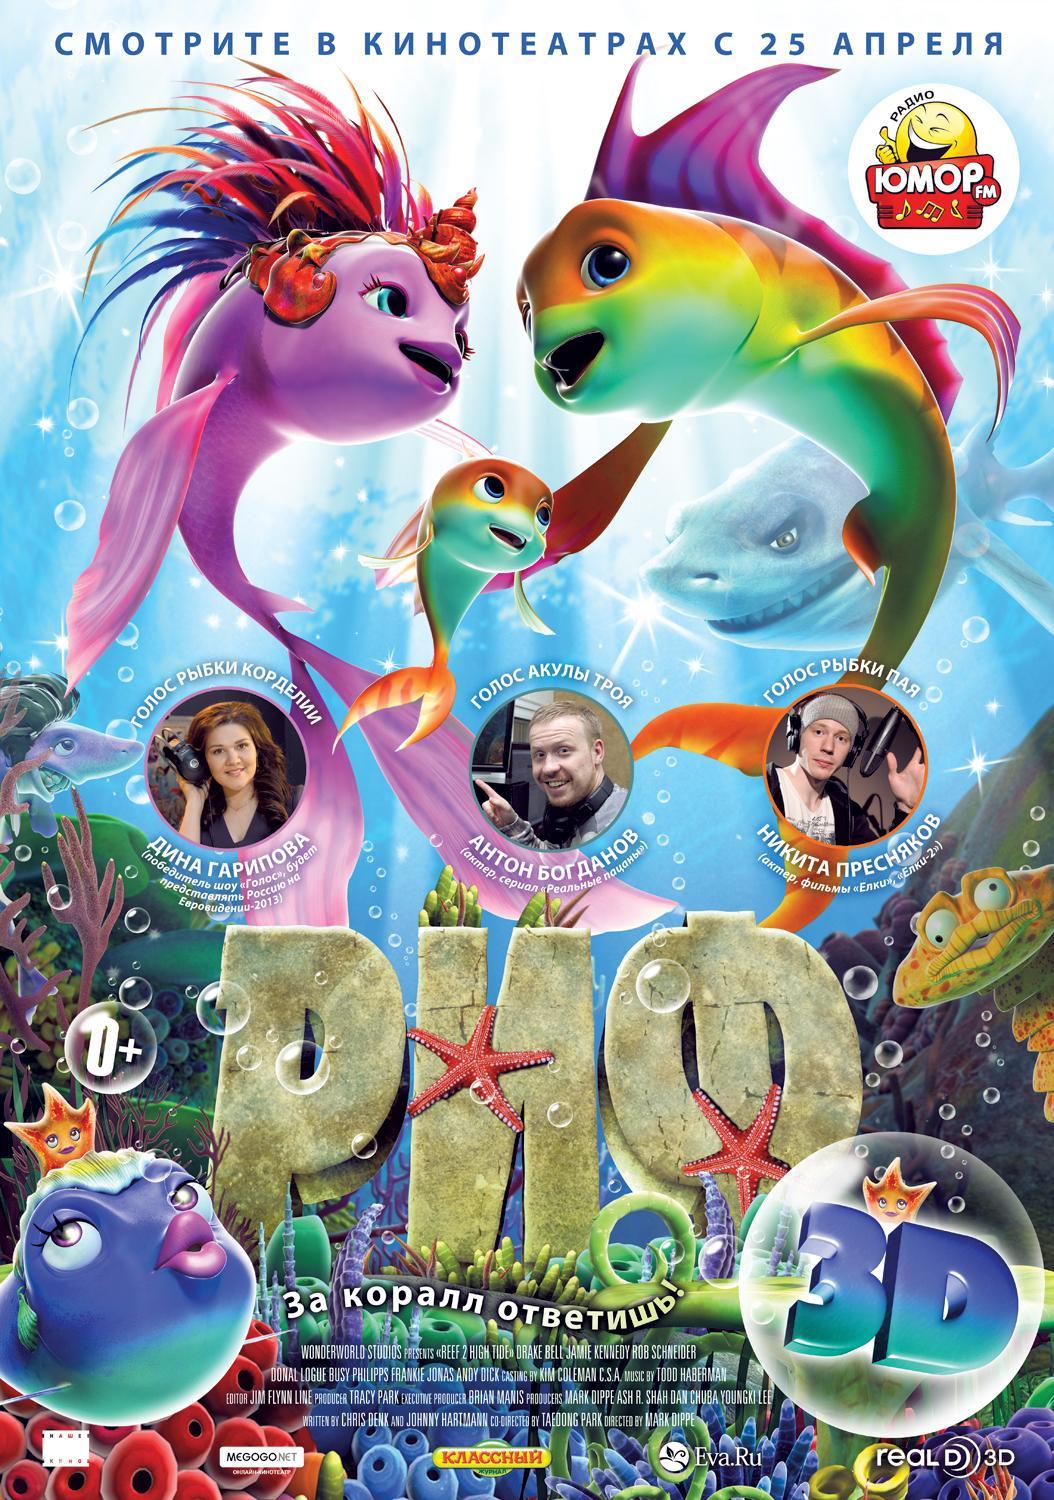 Постер фильма Риф 3D | Reef 2: High Tide